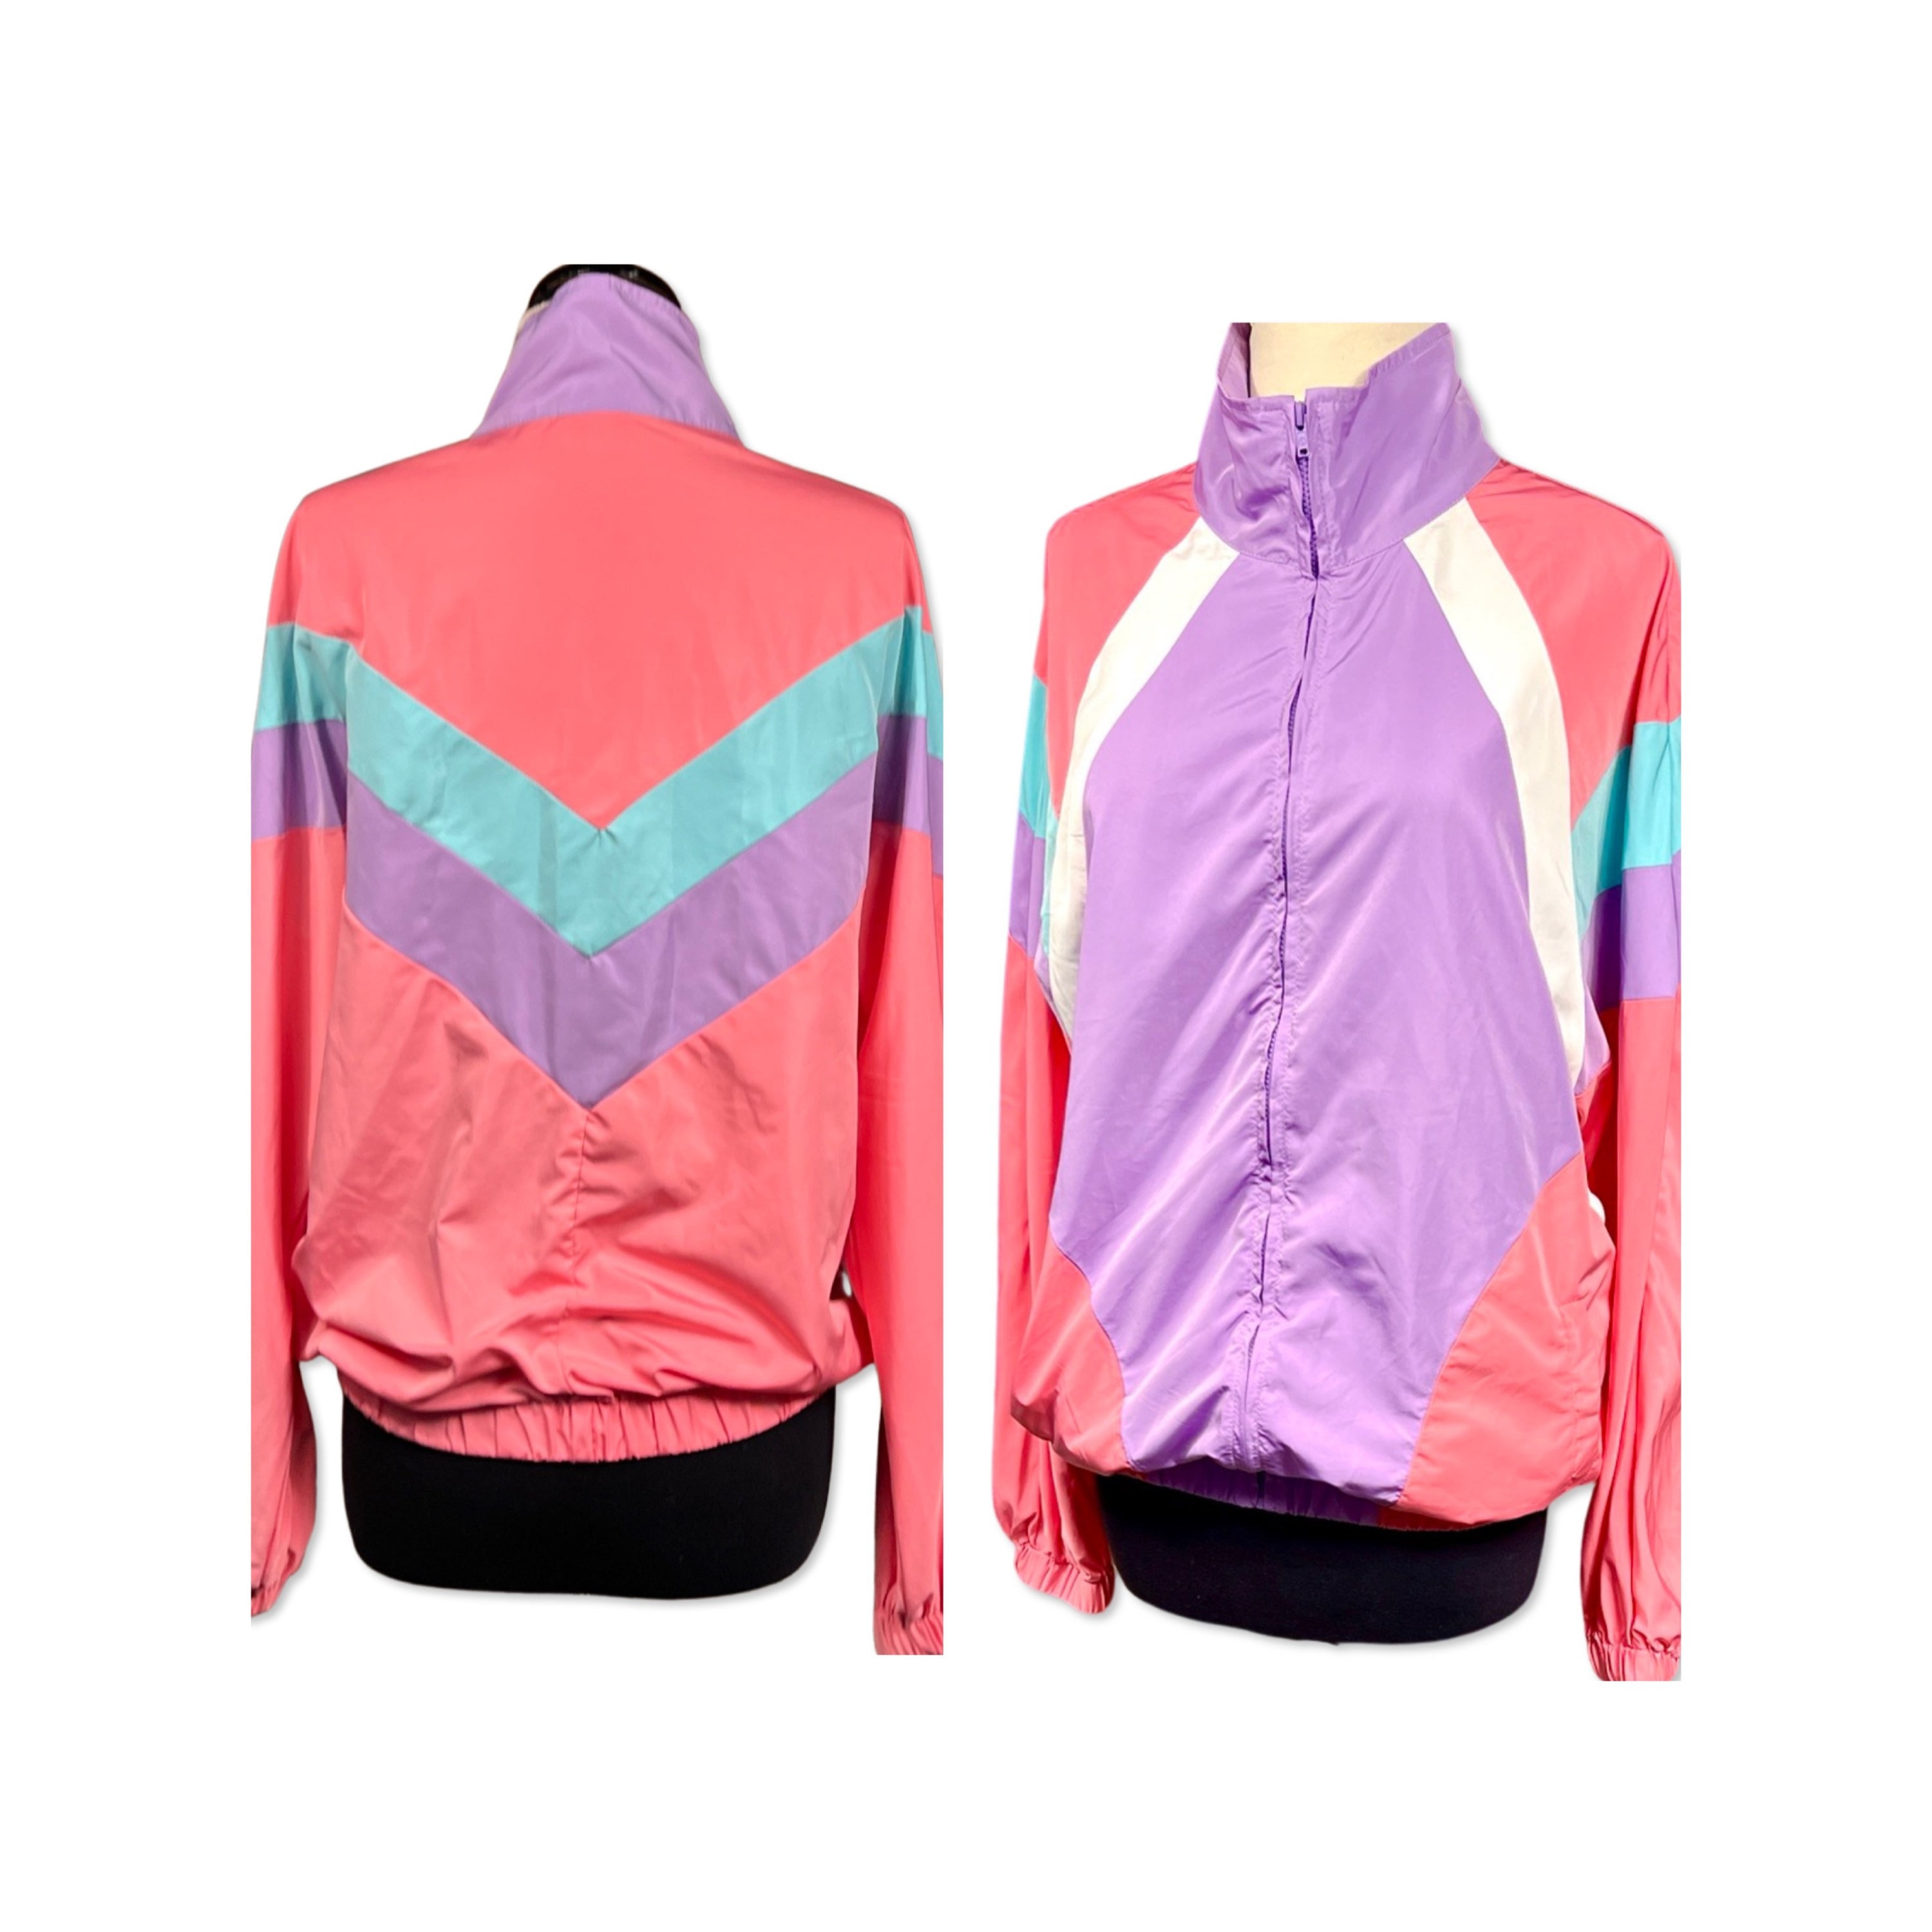 Vintage 1980s pink and purple colorblocked windbreaker, 80s size medium  windbreaker jacket, 80s workout jacket